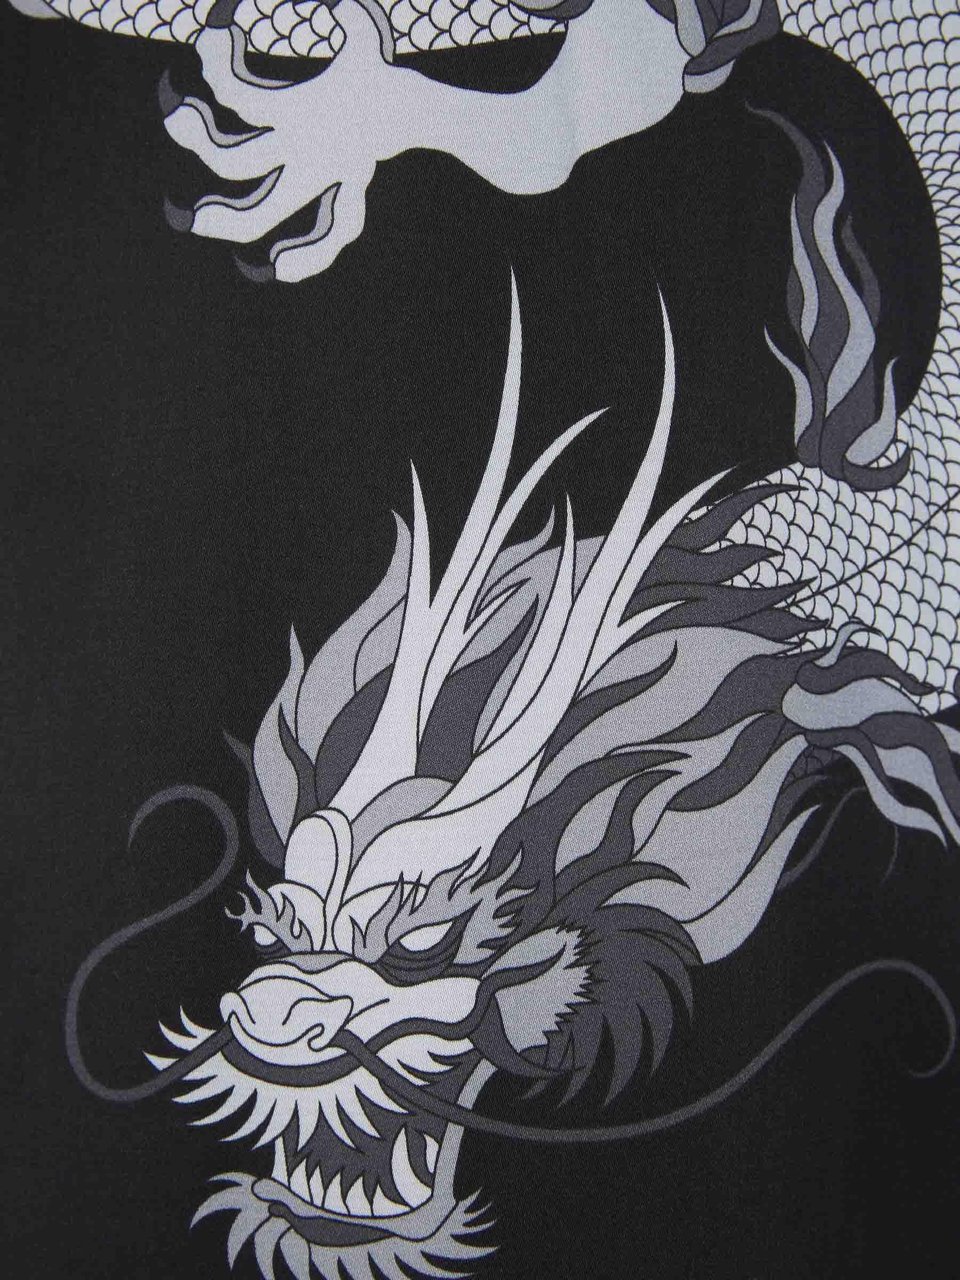 Balmain Dragon Motif Shirt Zwart